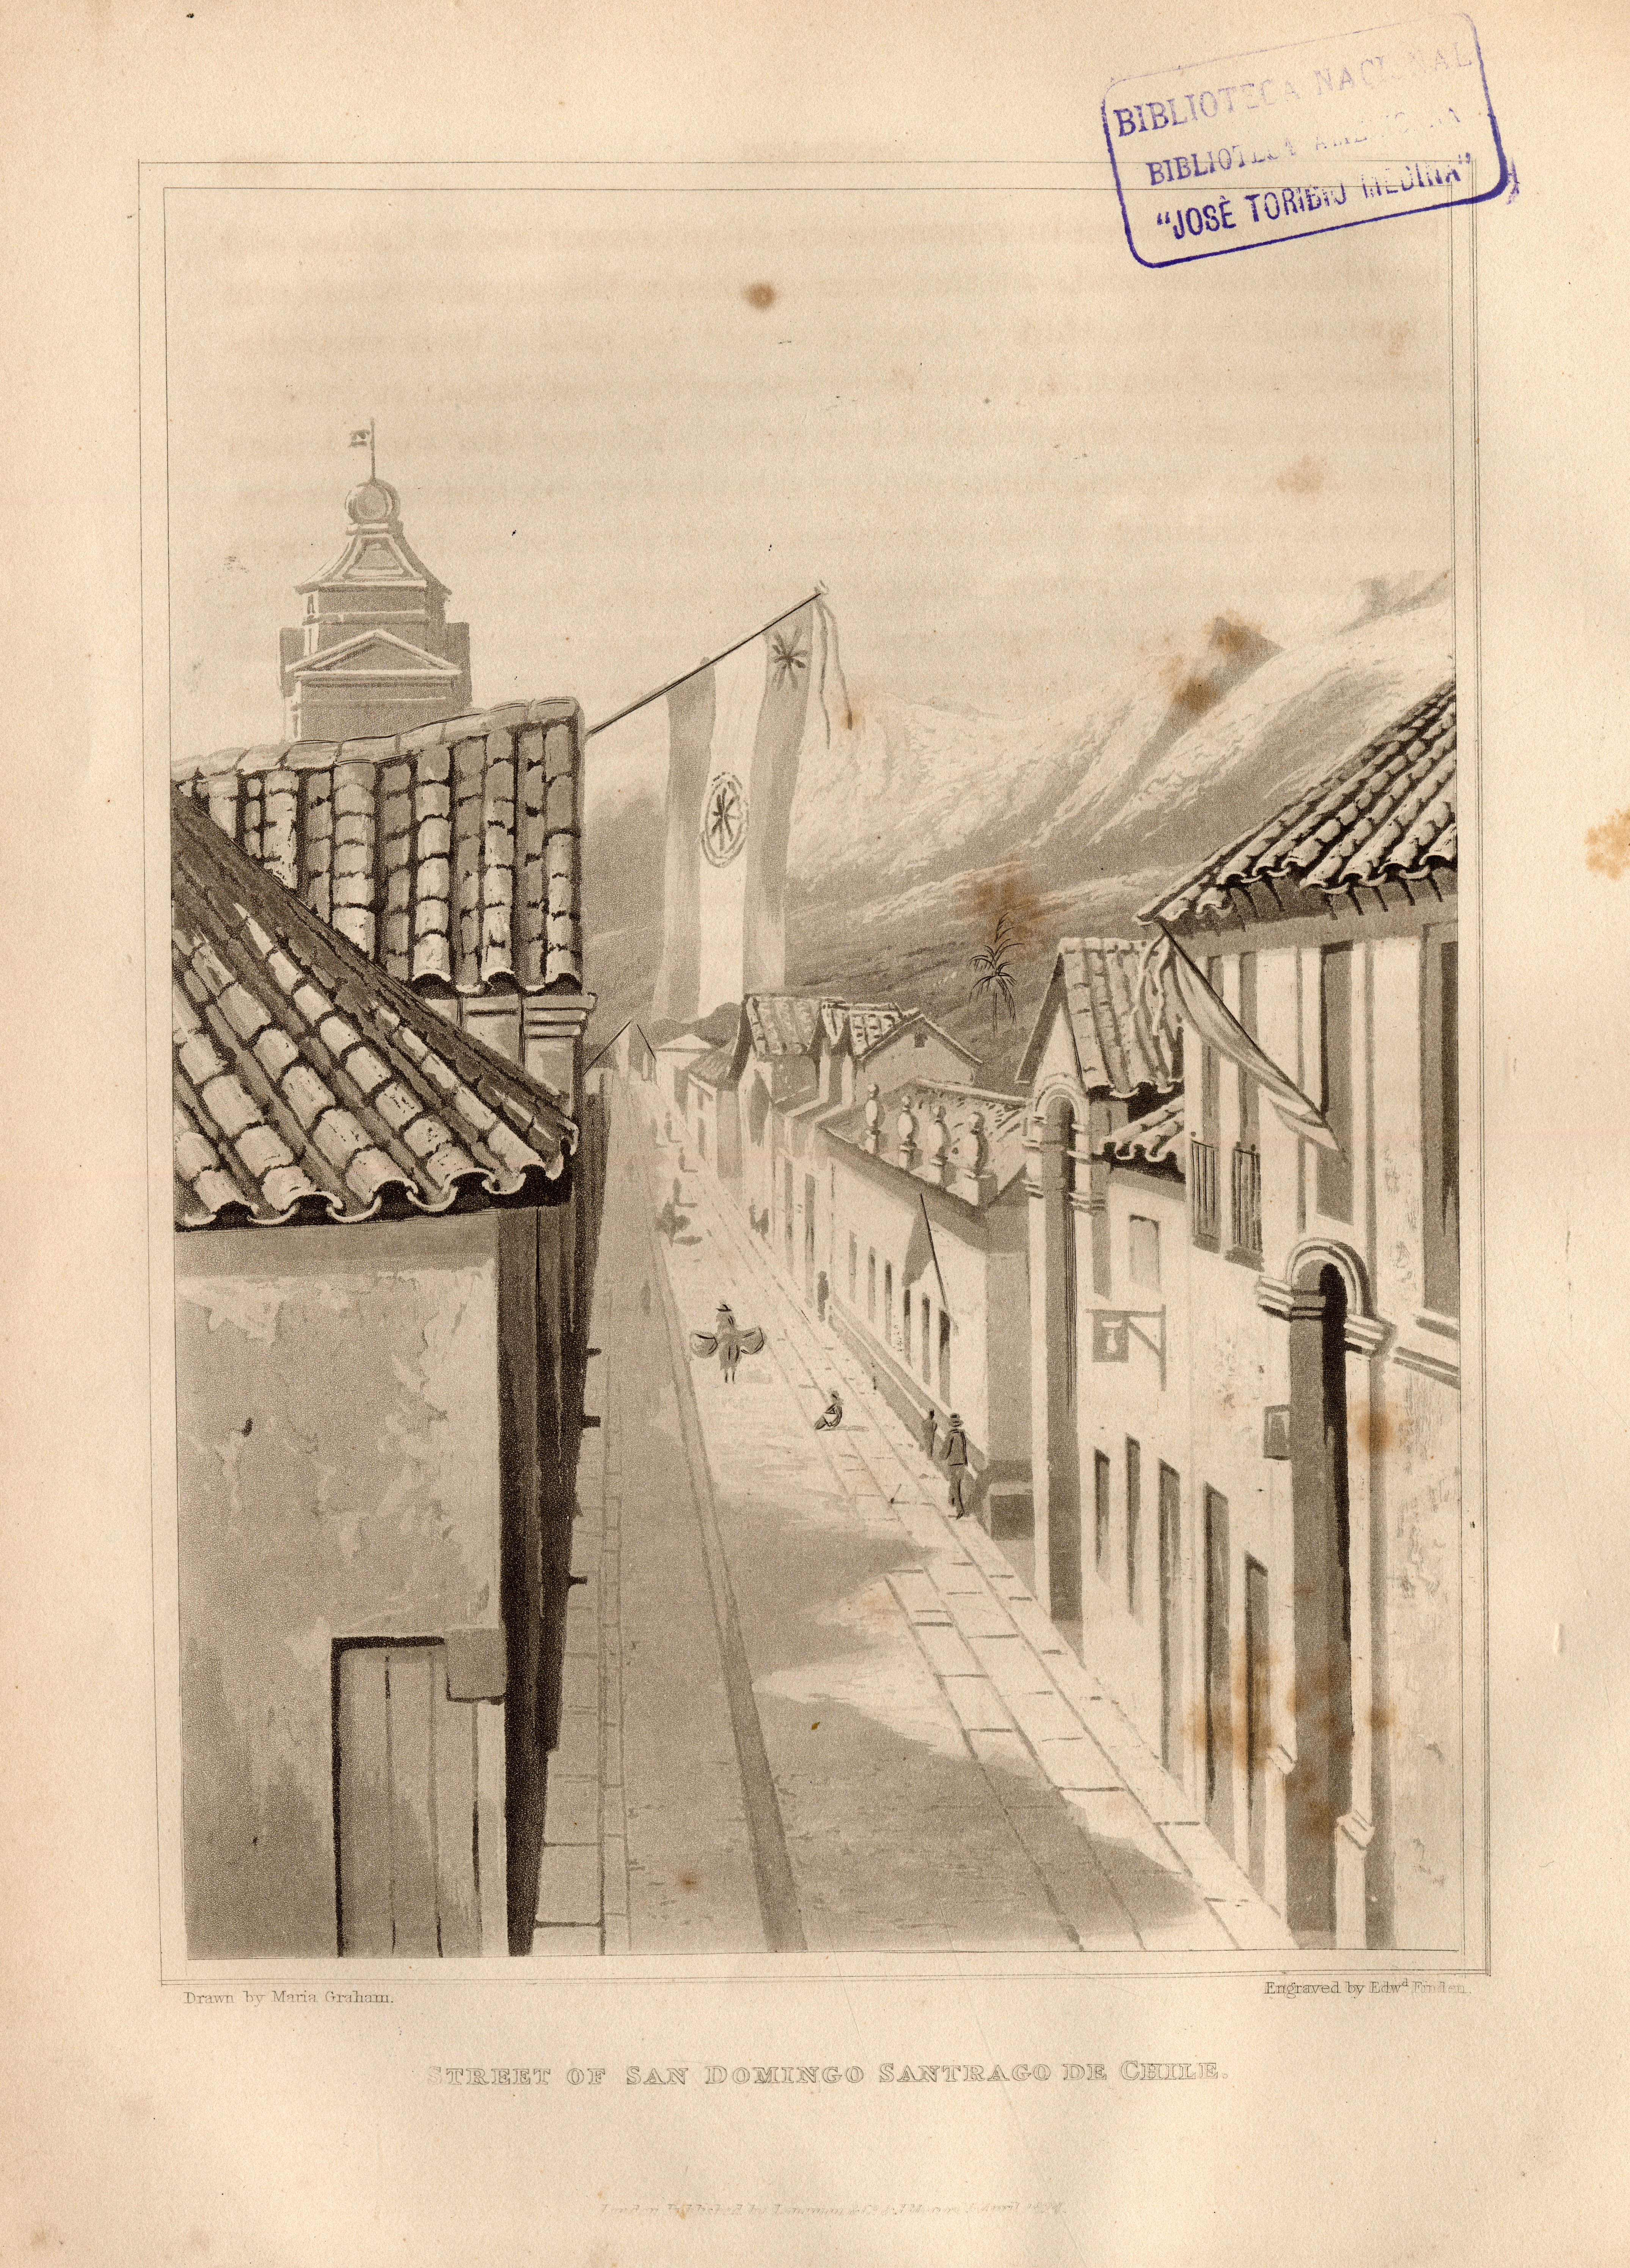 Street of San Domingo, Santiago de Chile, 1822